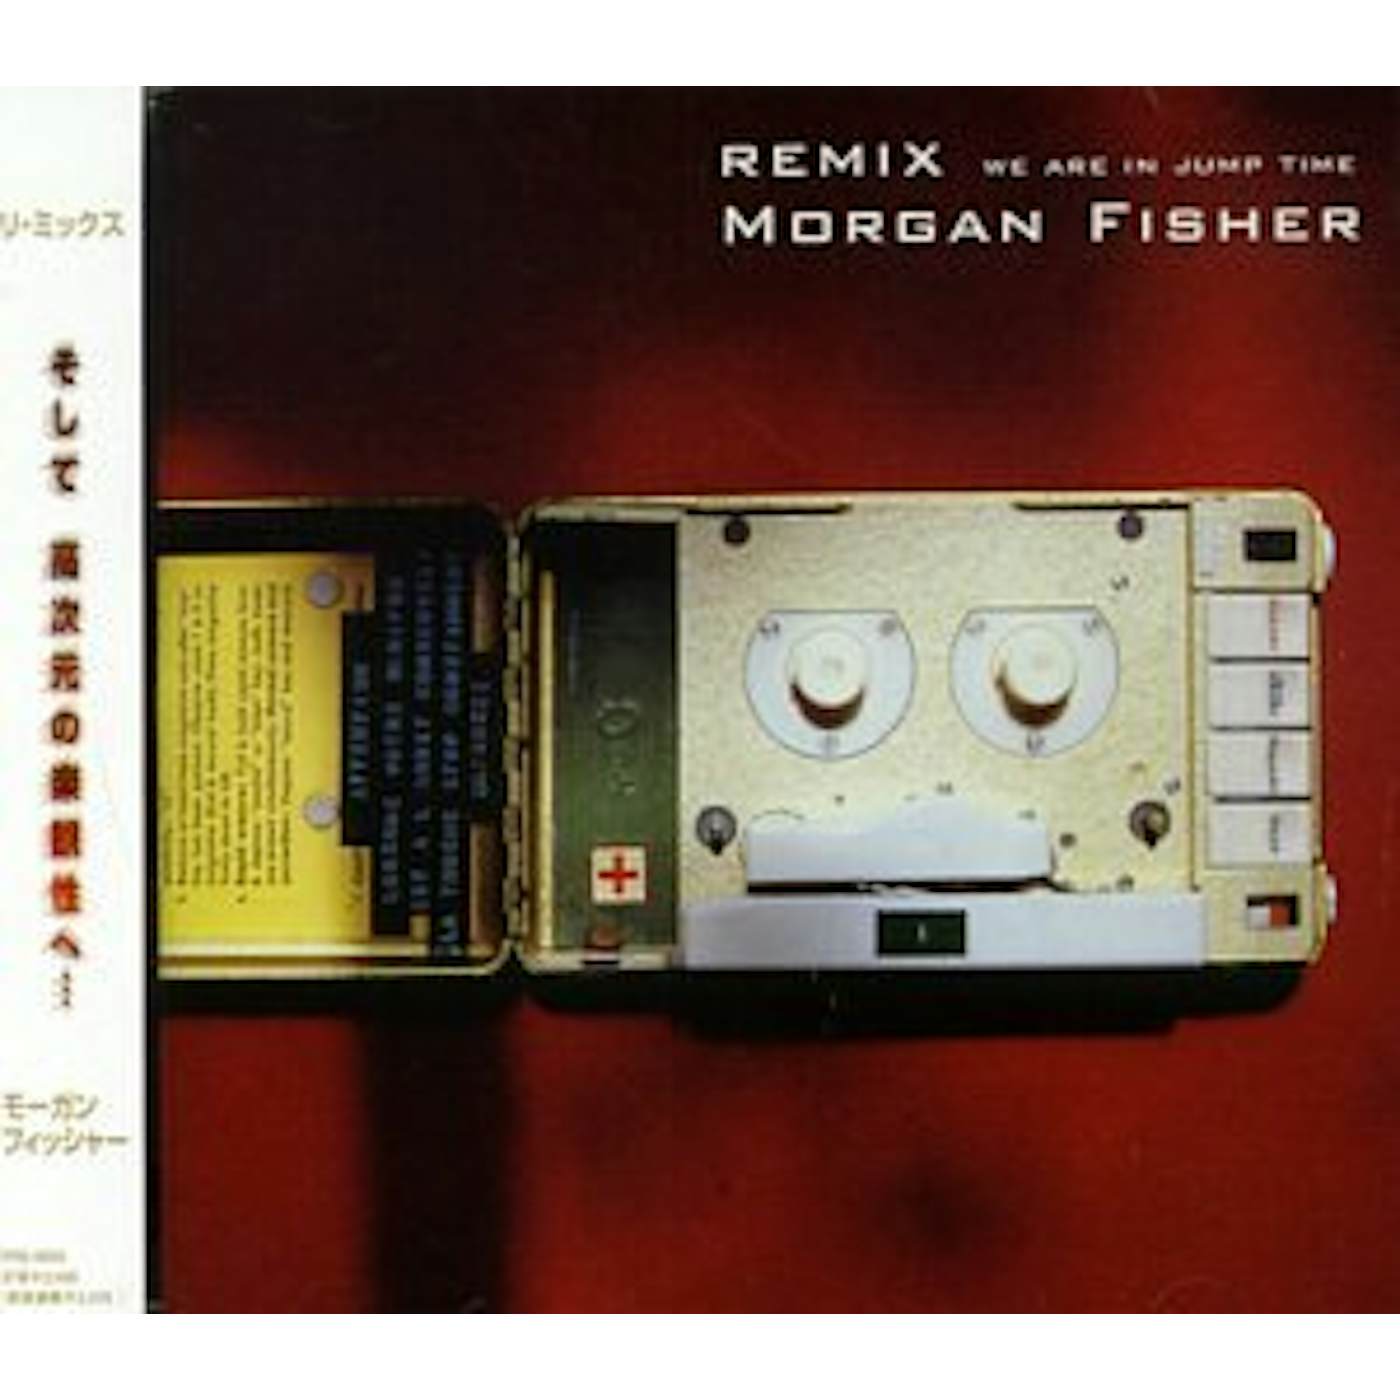 Morgan Fisher REMIX CD